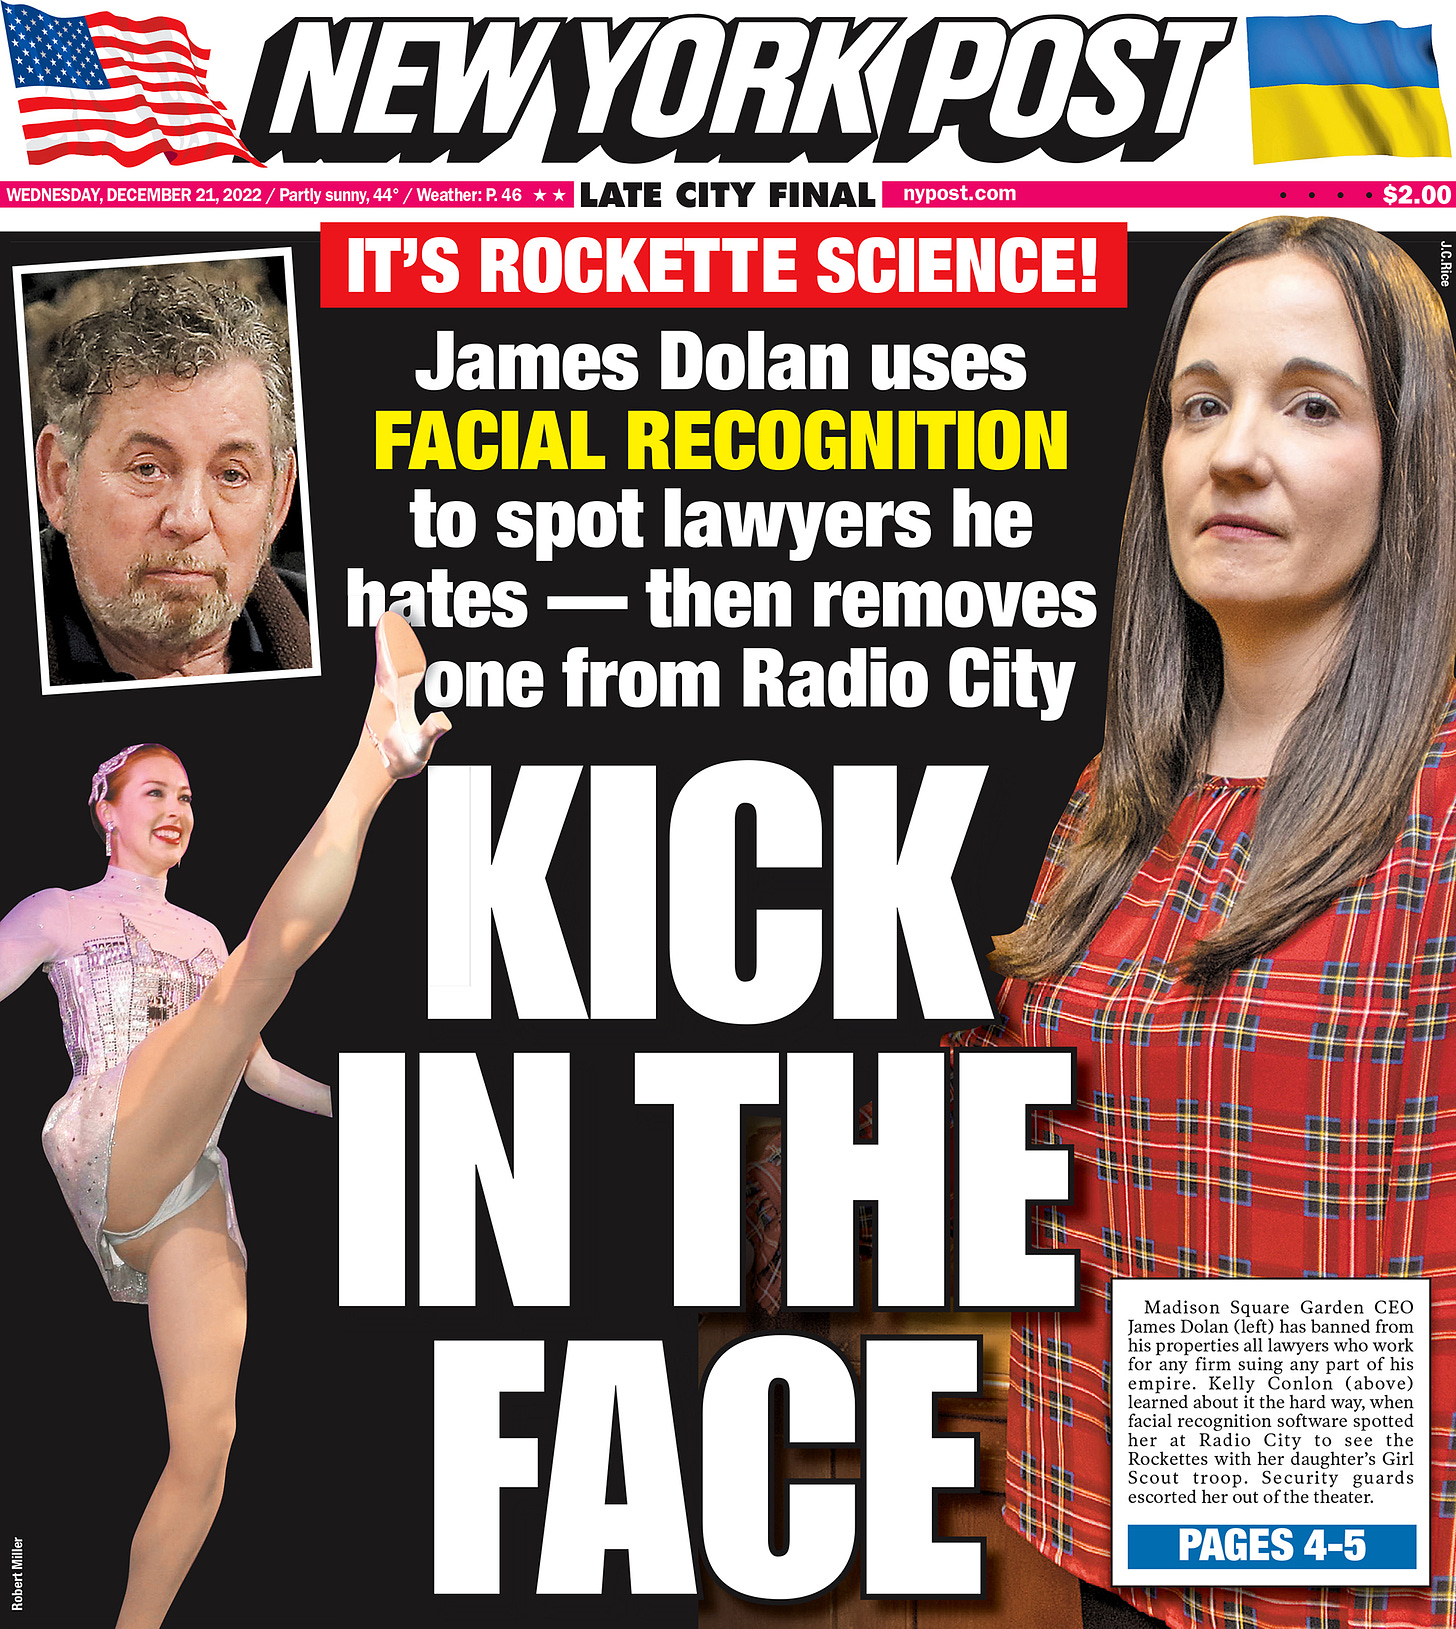 NHL, NBA must discipline James Dolan over facial recognition: NY pol